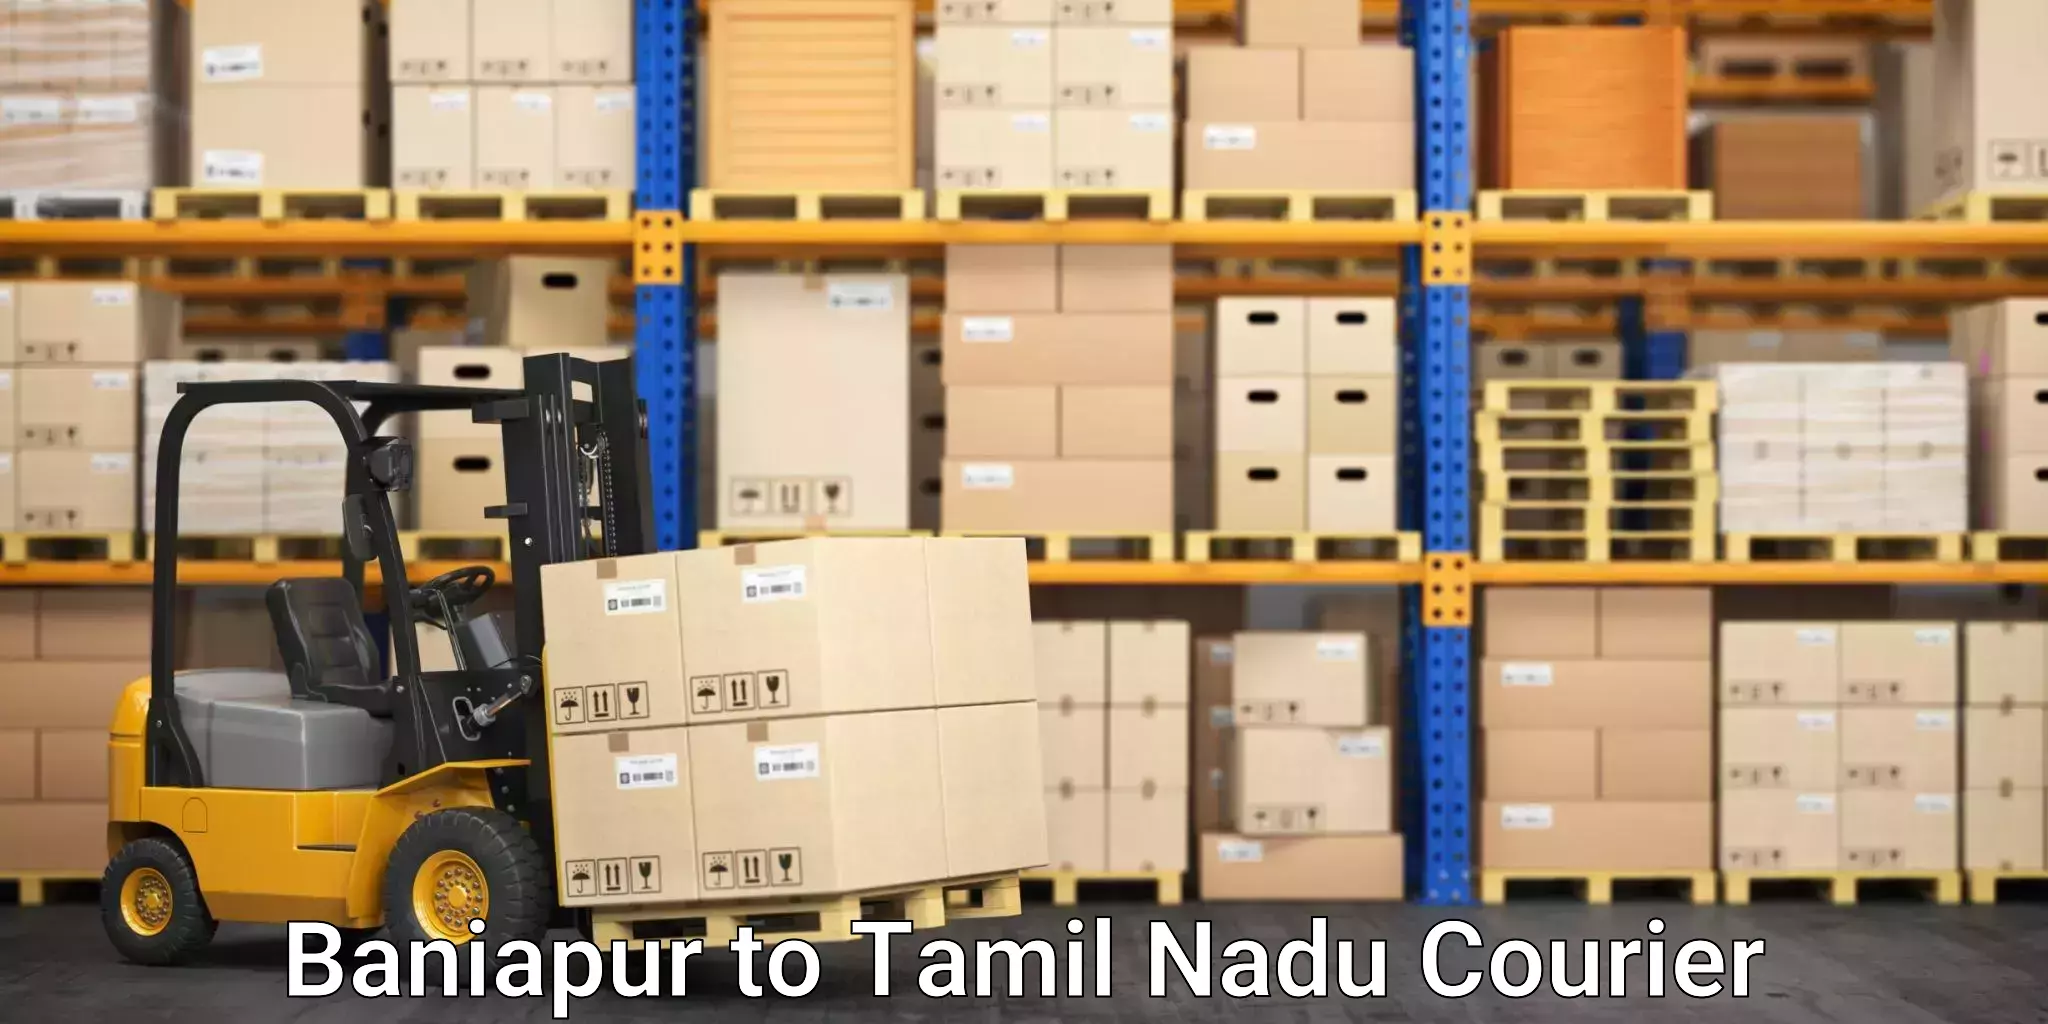 Furniture transport specialists Baniapur to Tamil Nadu